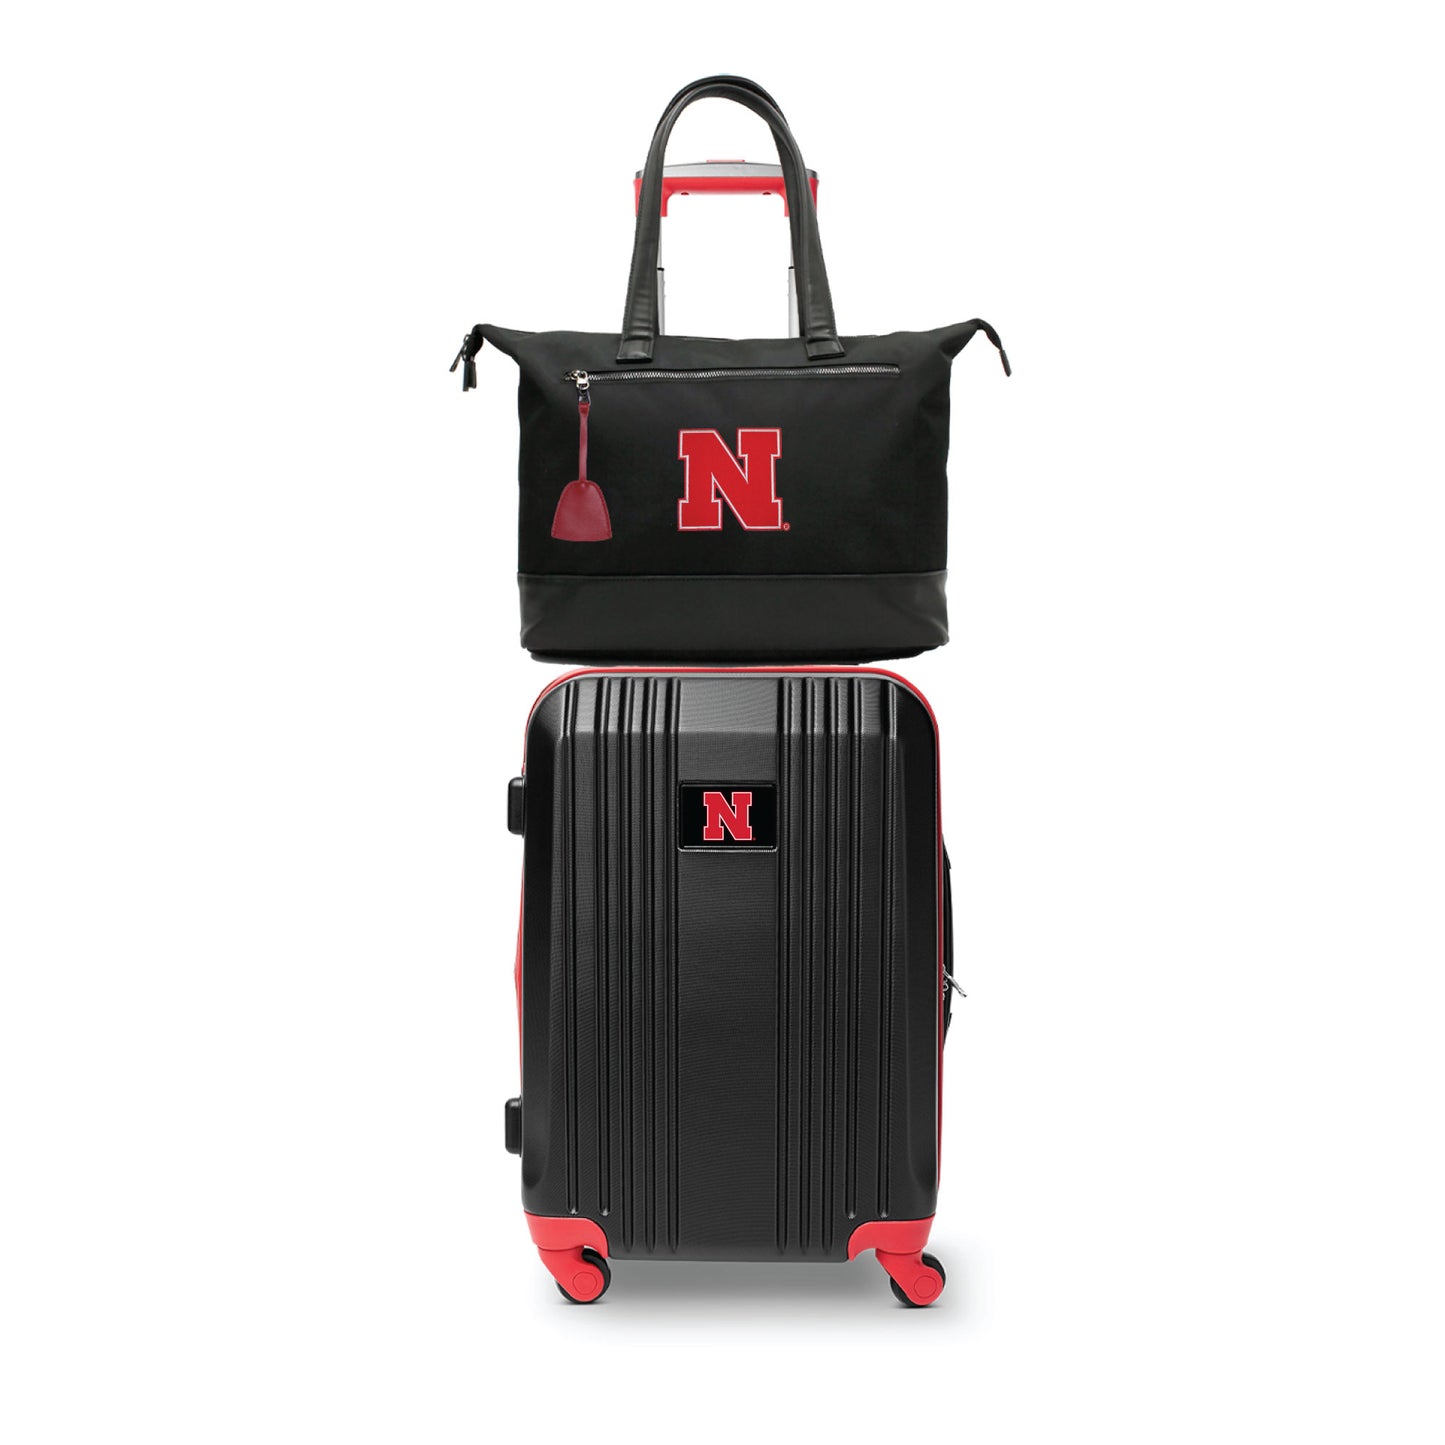 Nebraska Cornhuskers Premium Laptop Tote Bag and Luggage Set